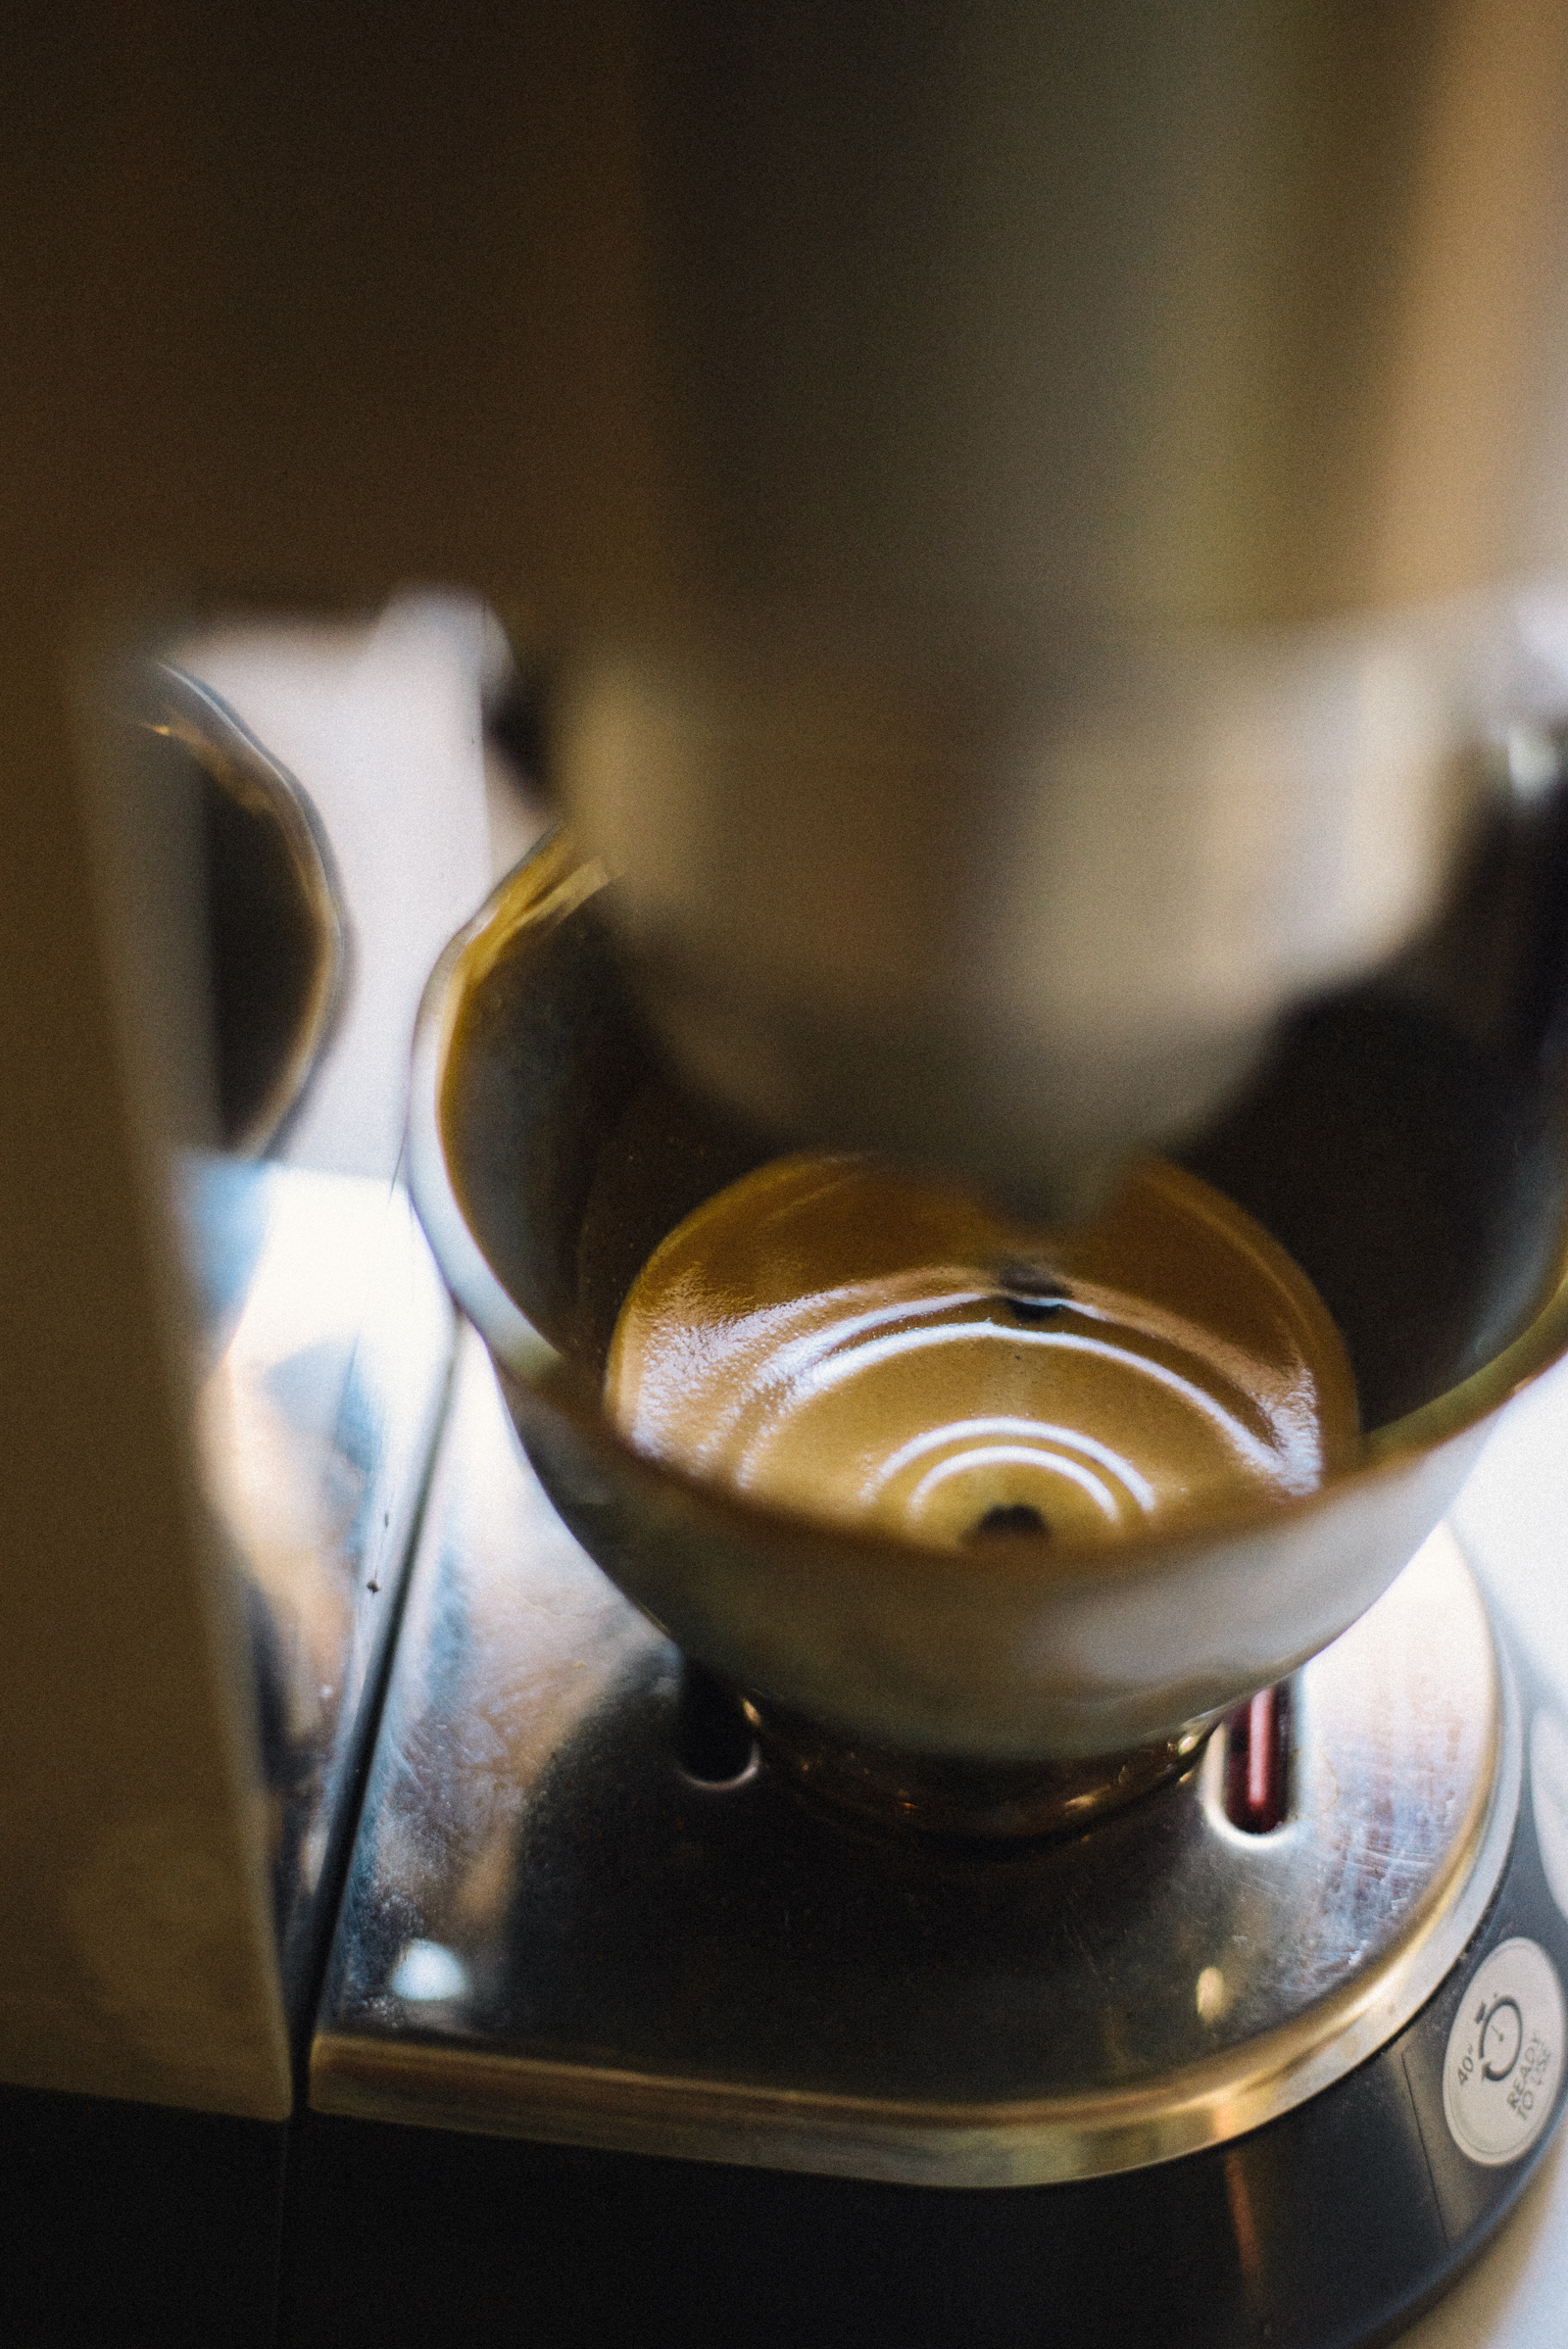 delonghi espresso machine leaving ripples in coffee cup